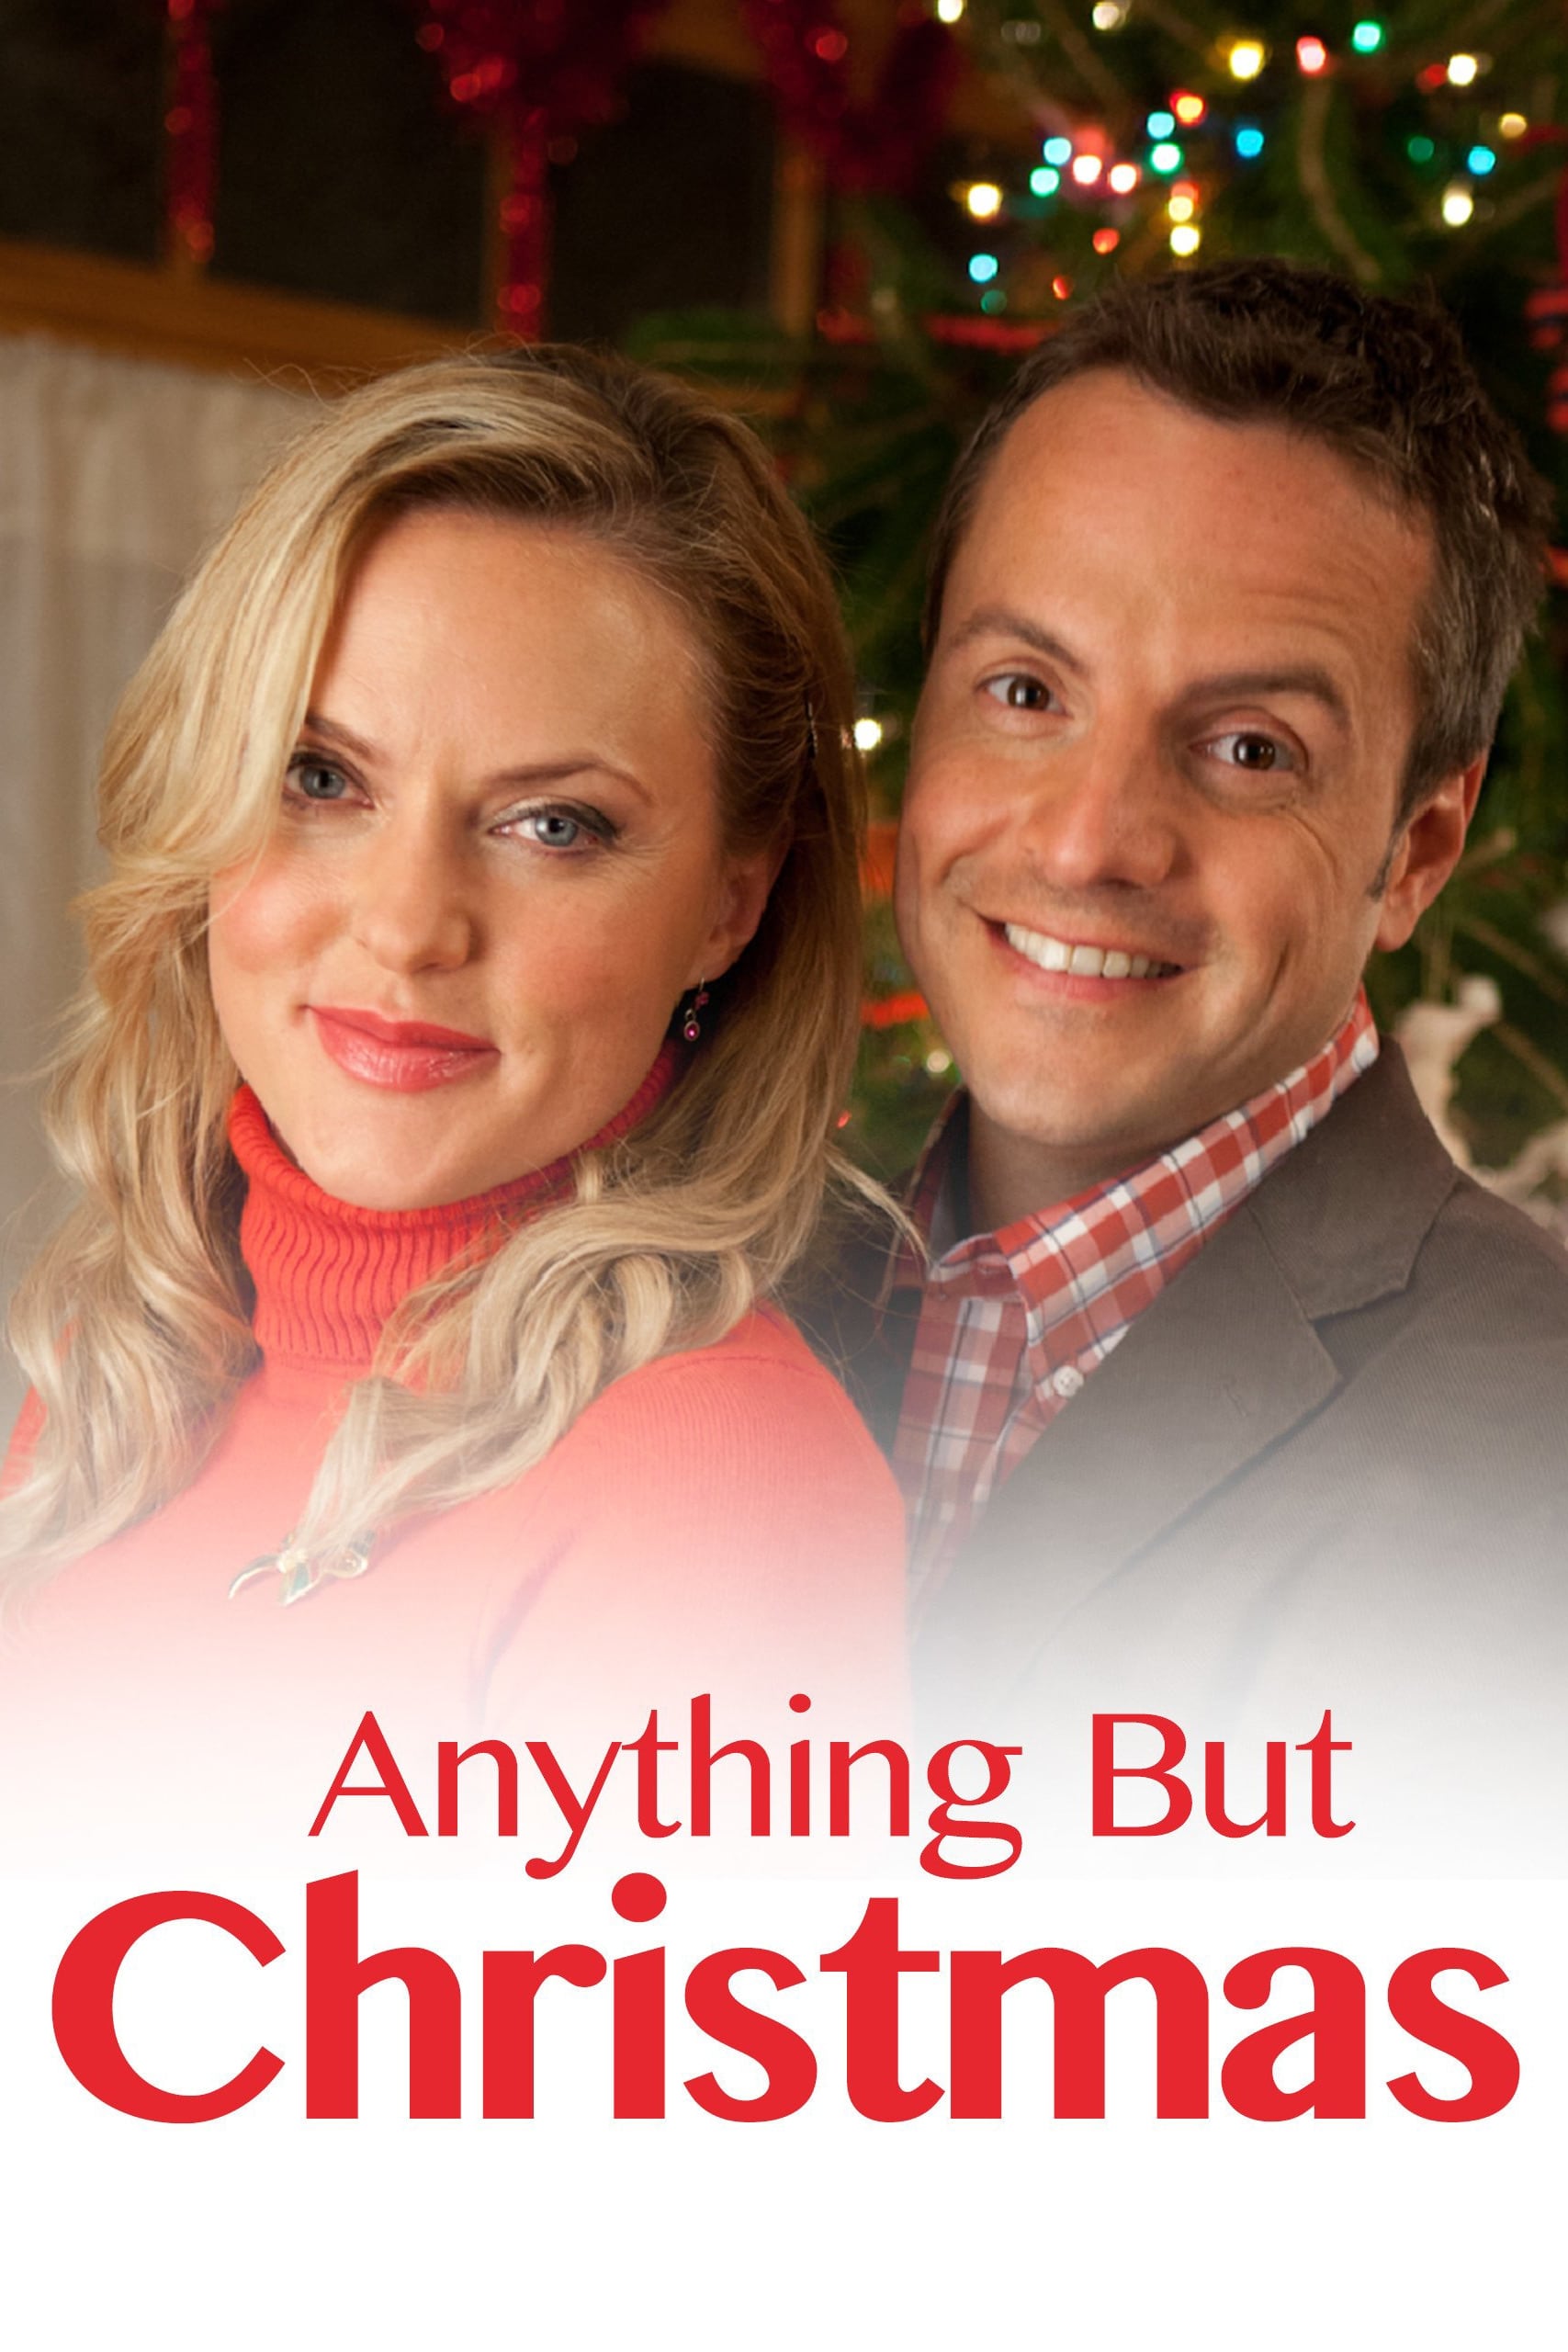 Anything but Christmas (2012)